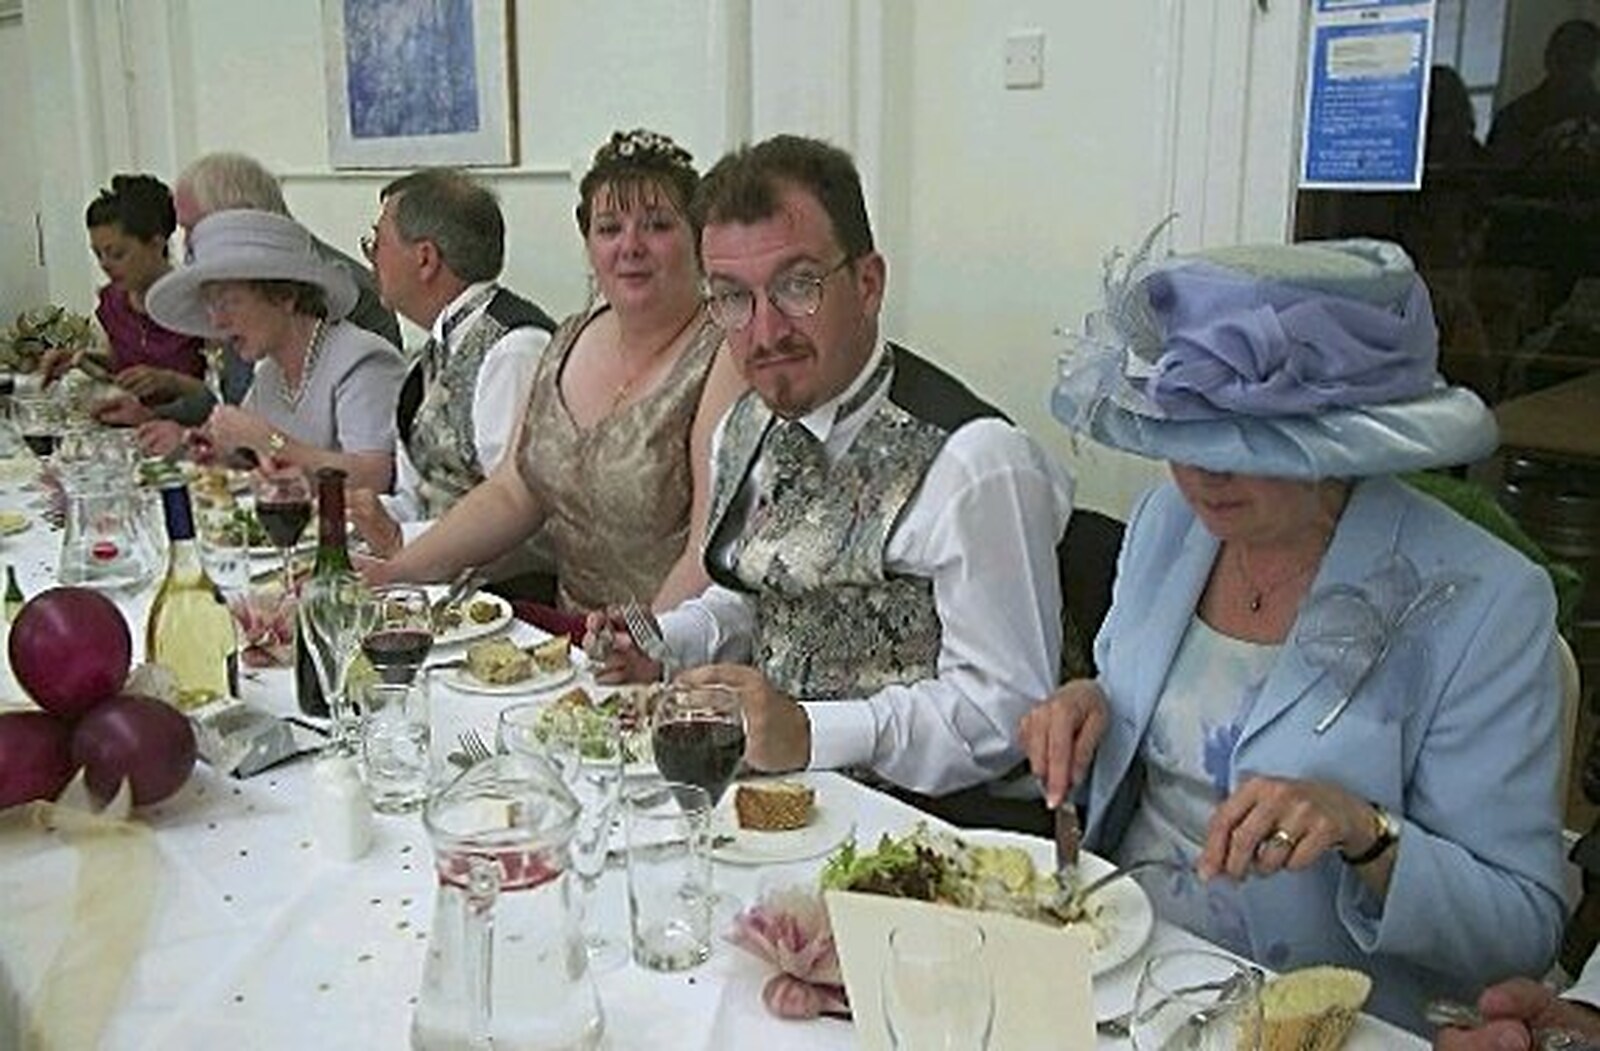 Wedding dinner from Phil and Lisa's Wedding, Woolverston Hall, Ipswich, Suffolk - 1st July 2001